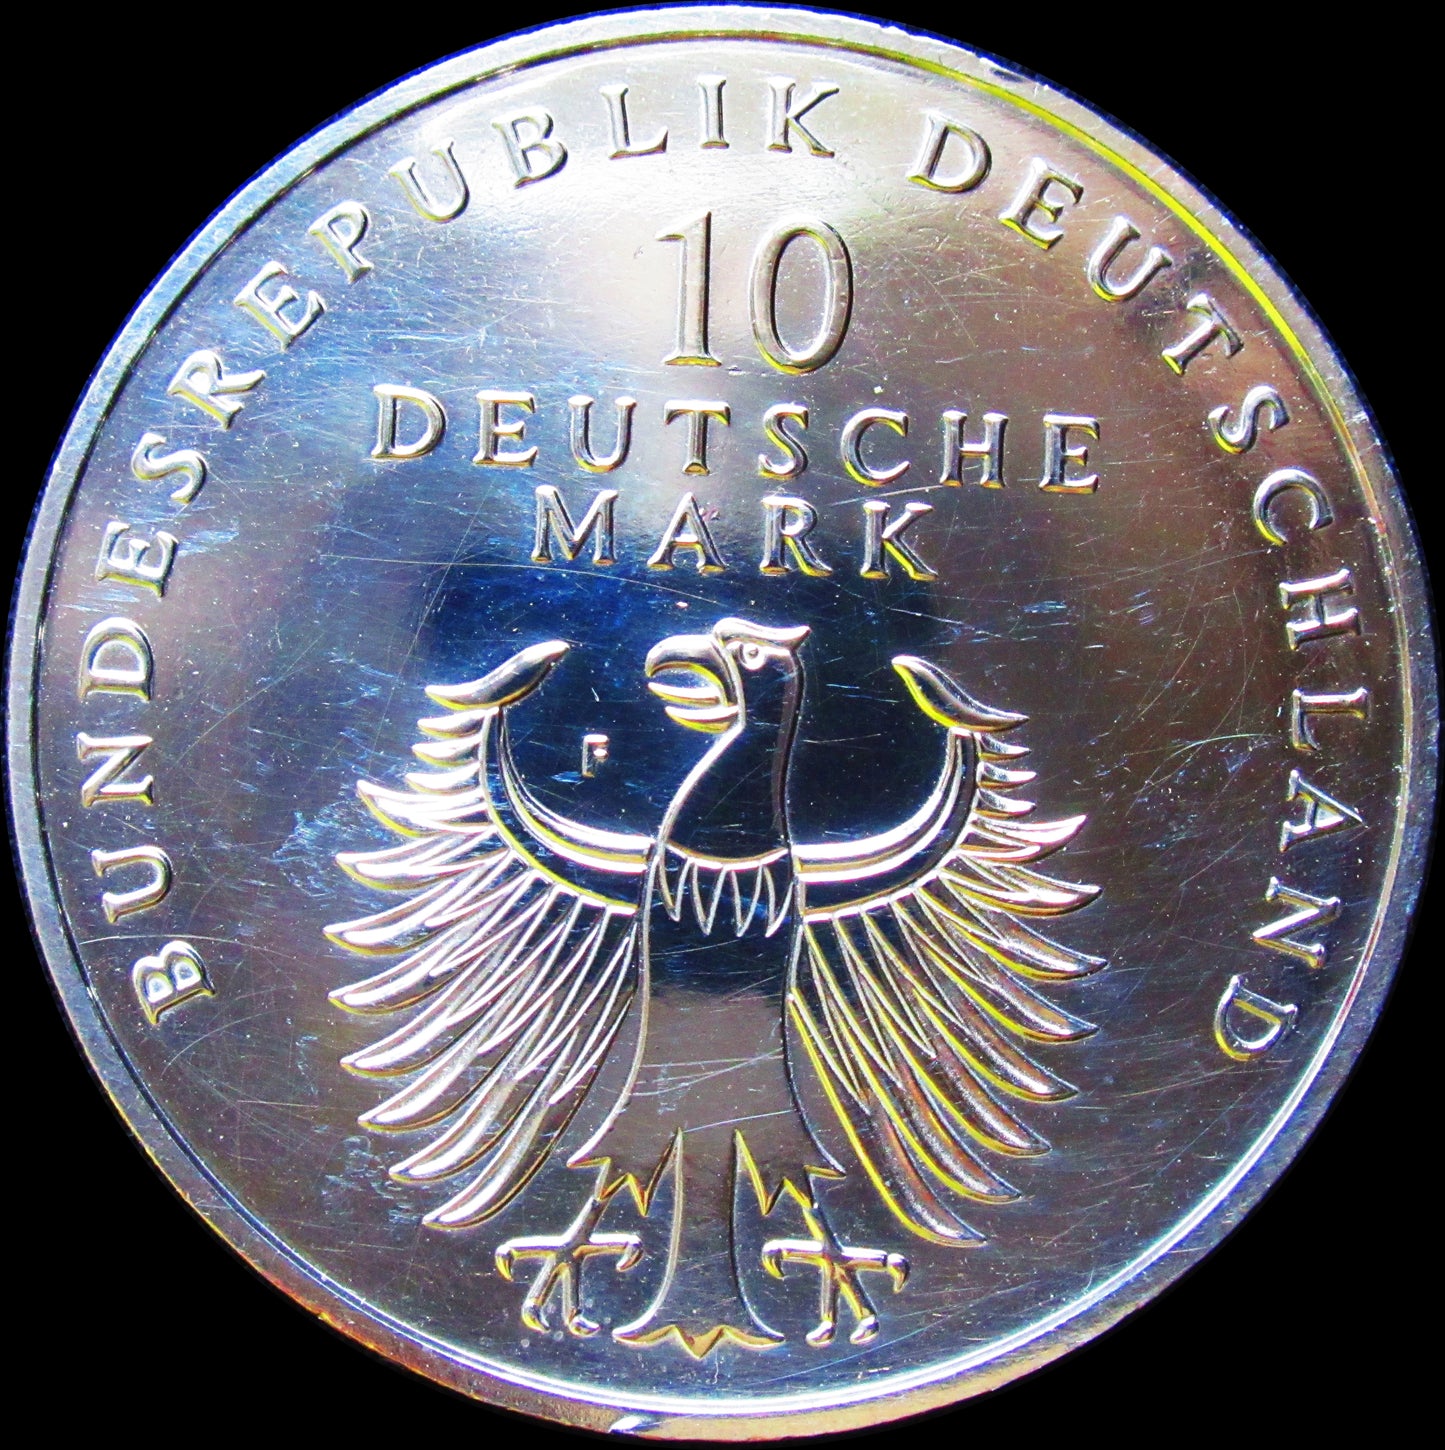 50 YEARS OF GERMAN MARK, series 10 DM silver coins, 1998